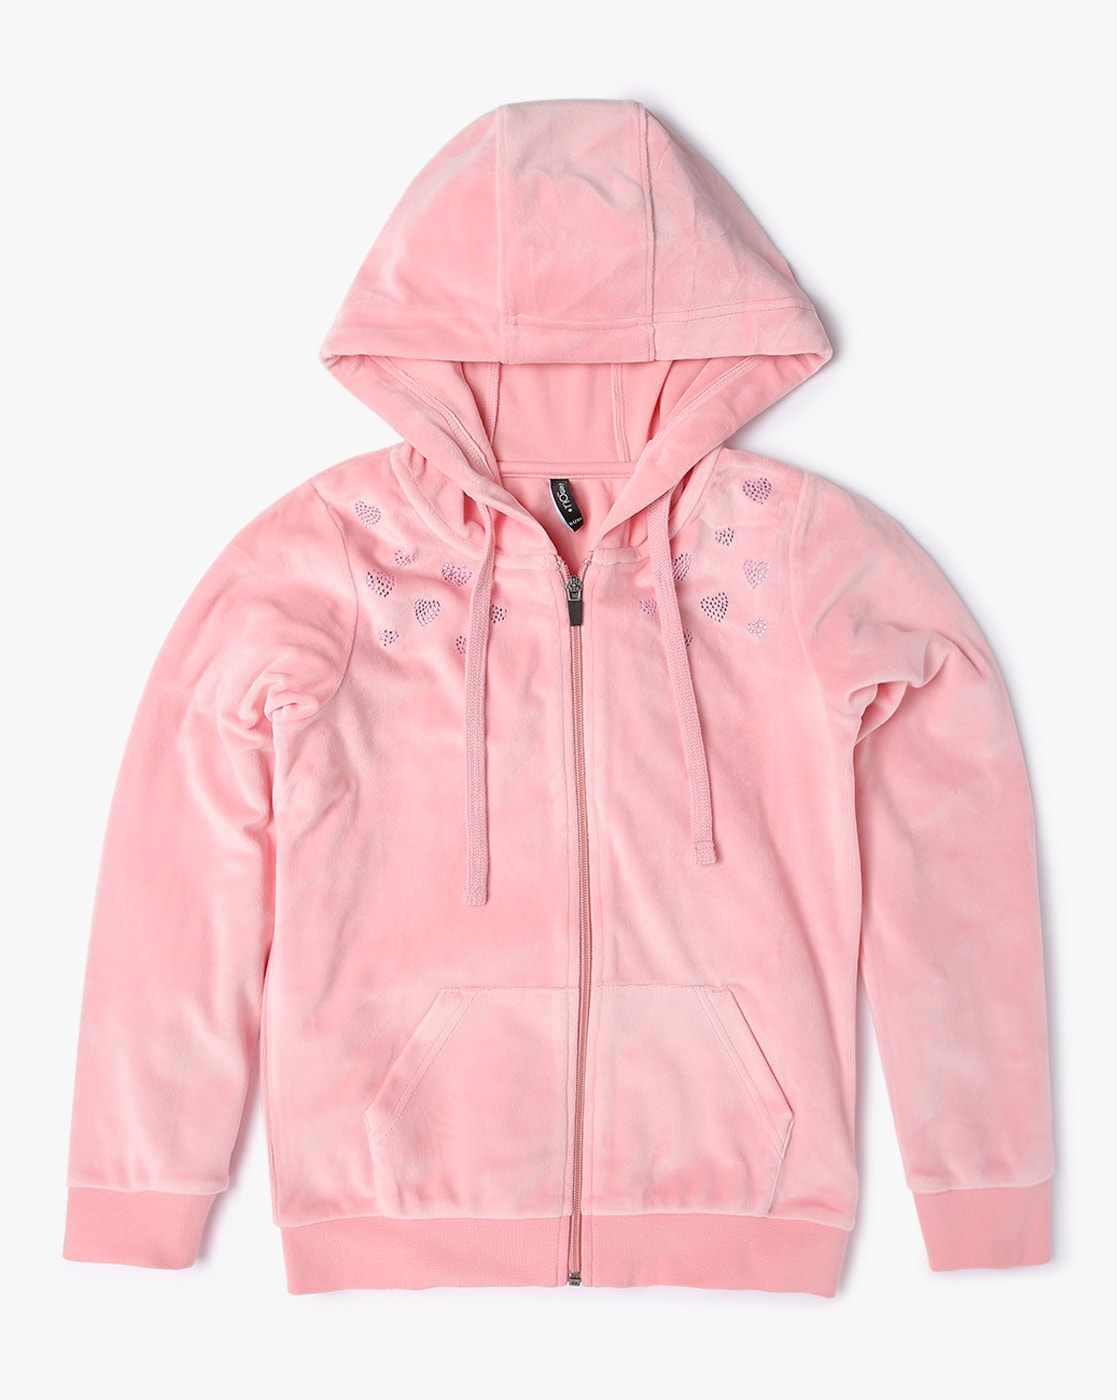 Girls Lucky Brand Zip up Hoodie Pink Size medium 10/12